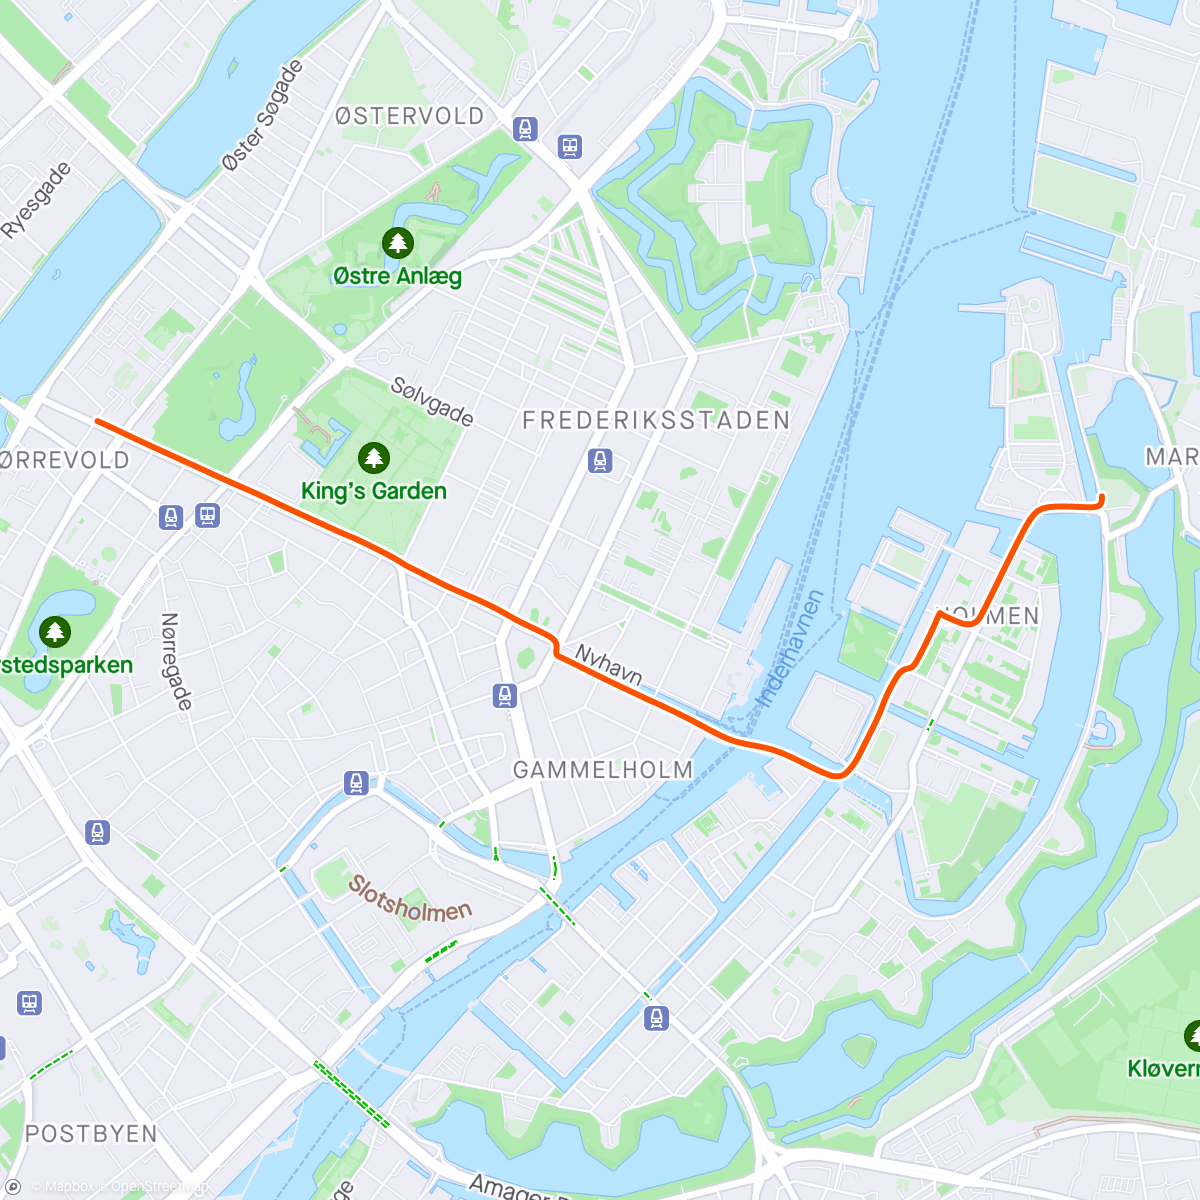 Map of the activity, I love city biking here